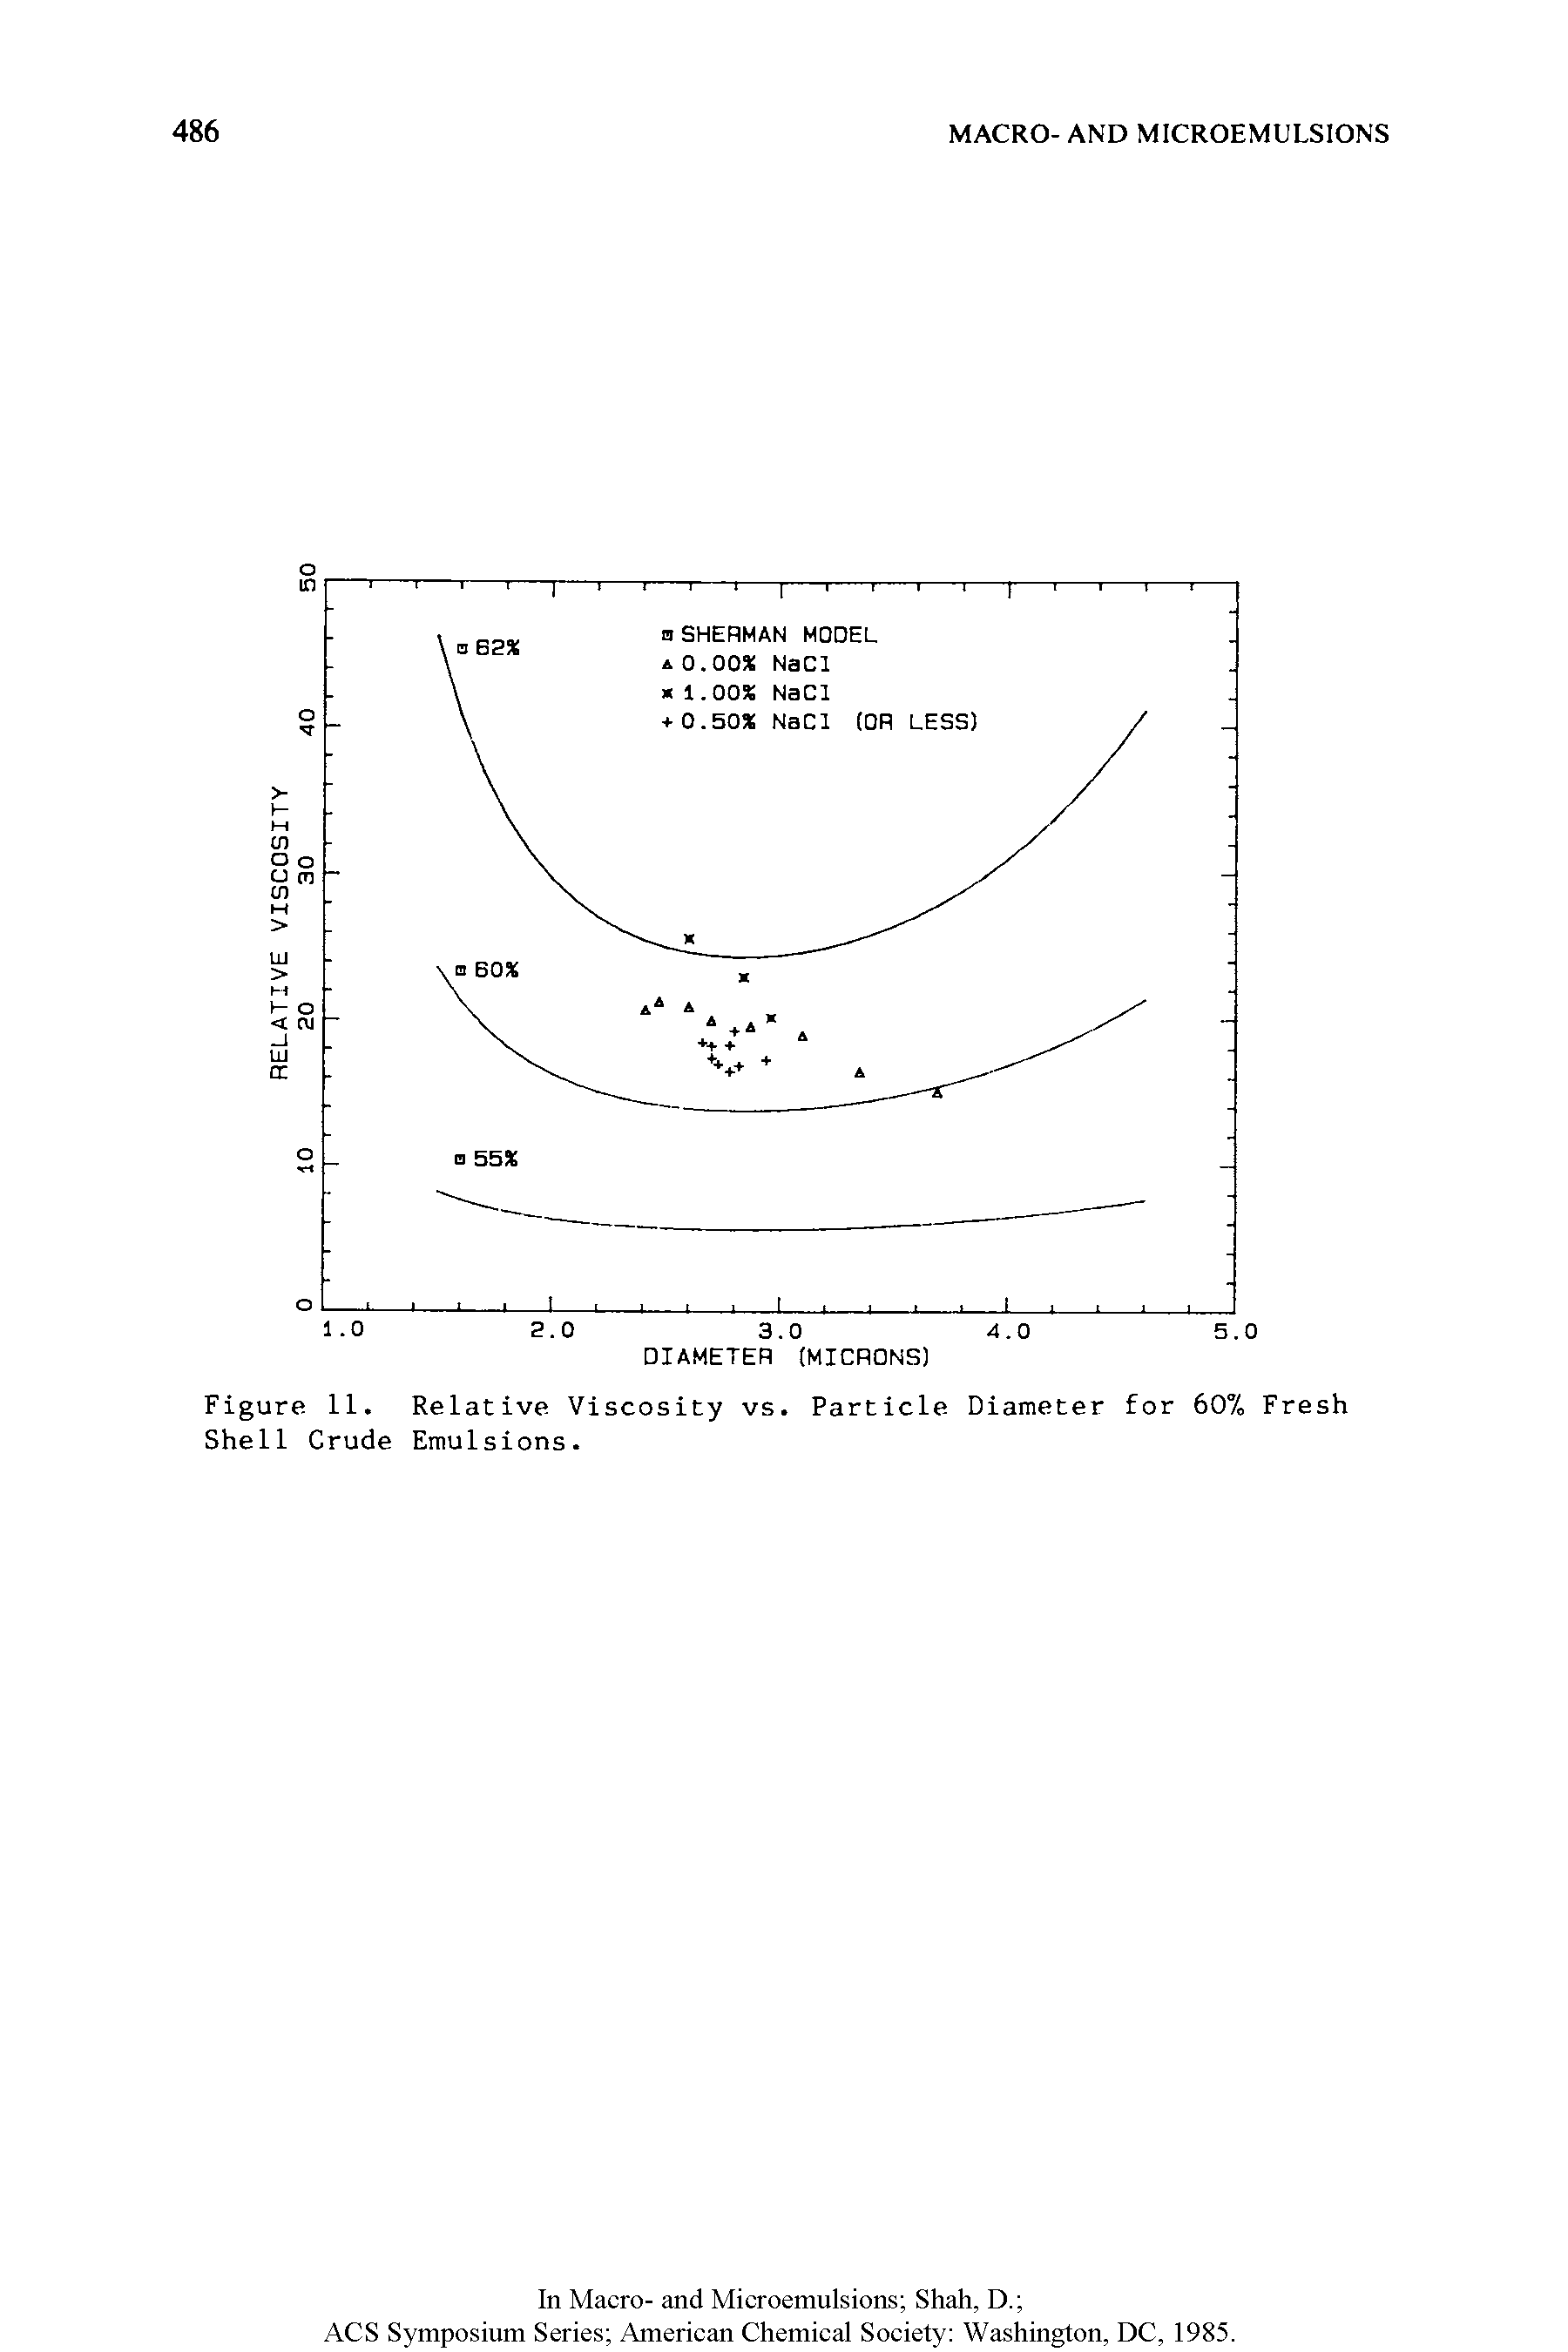 Figure 11. Relative Viscosity vs. Particle Diameter for 607 Fresh Shell Crude Emulsions.